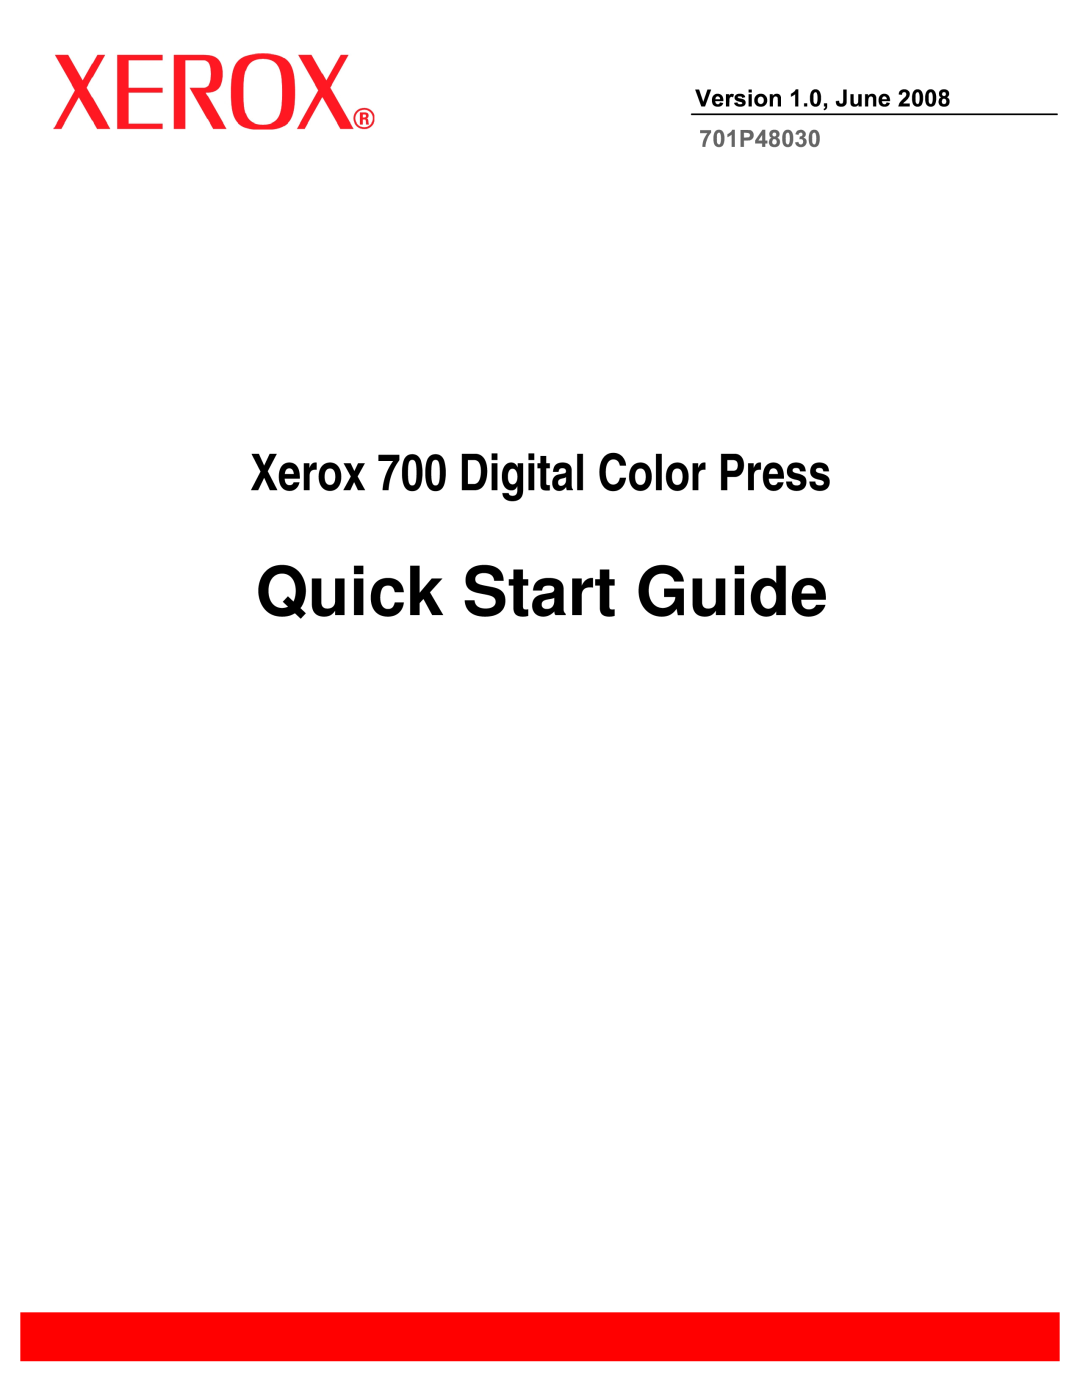 Xerox quick start Quick Start Guide, Xerox 700 Digital Color Press 